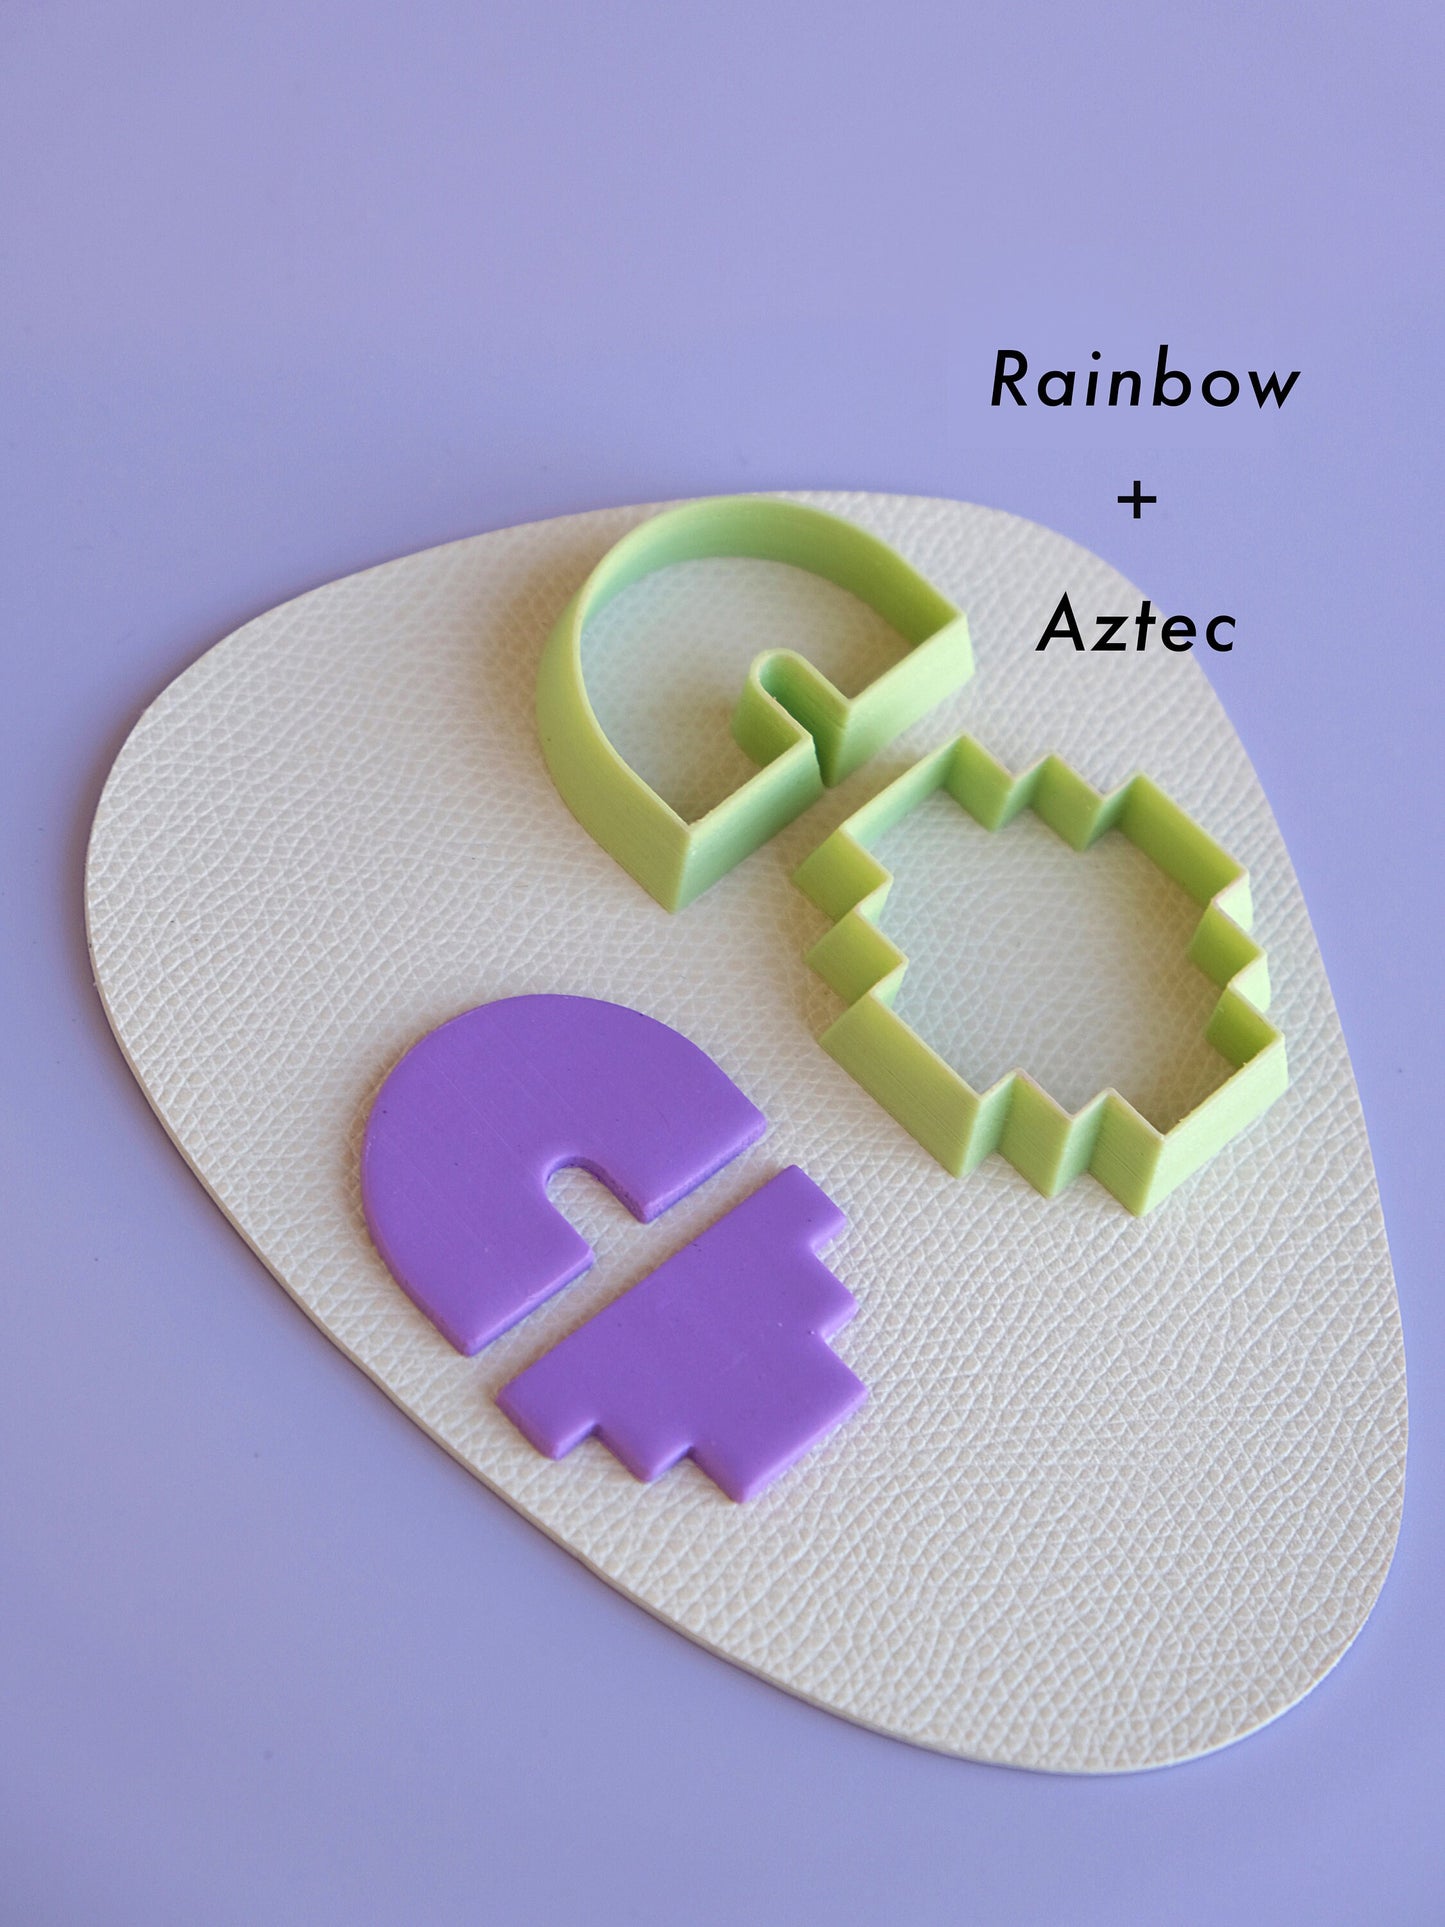 Originial Rainbow Shape Clay Earring Cutter